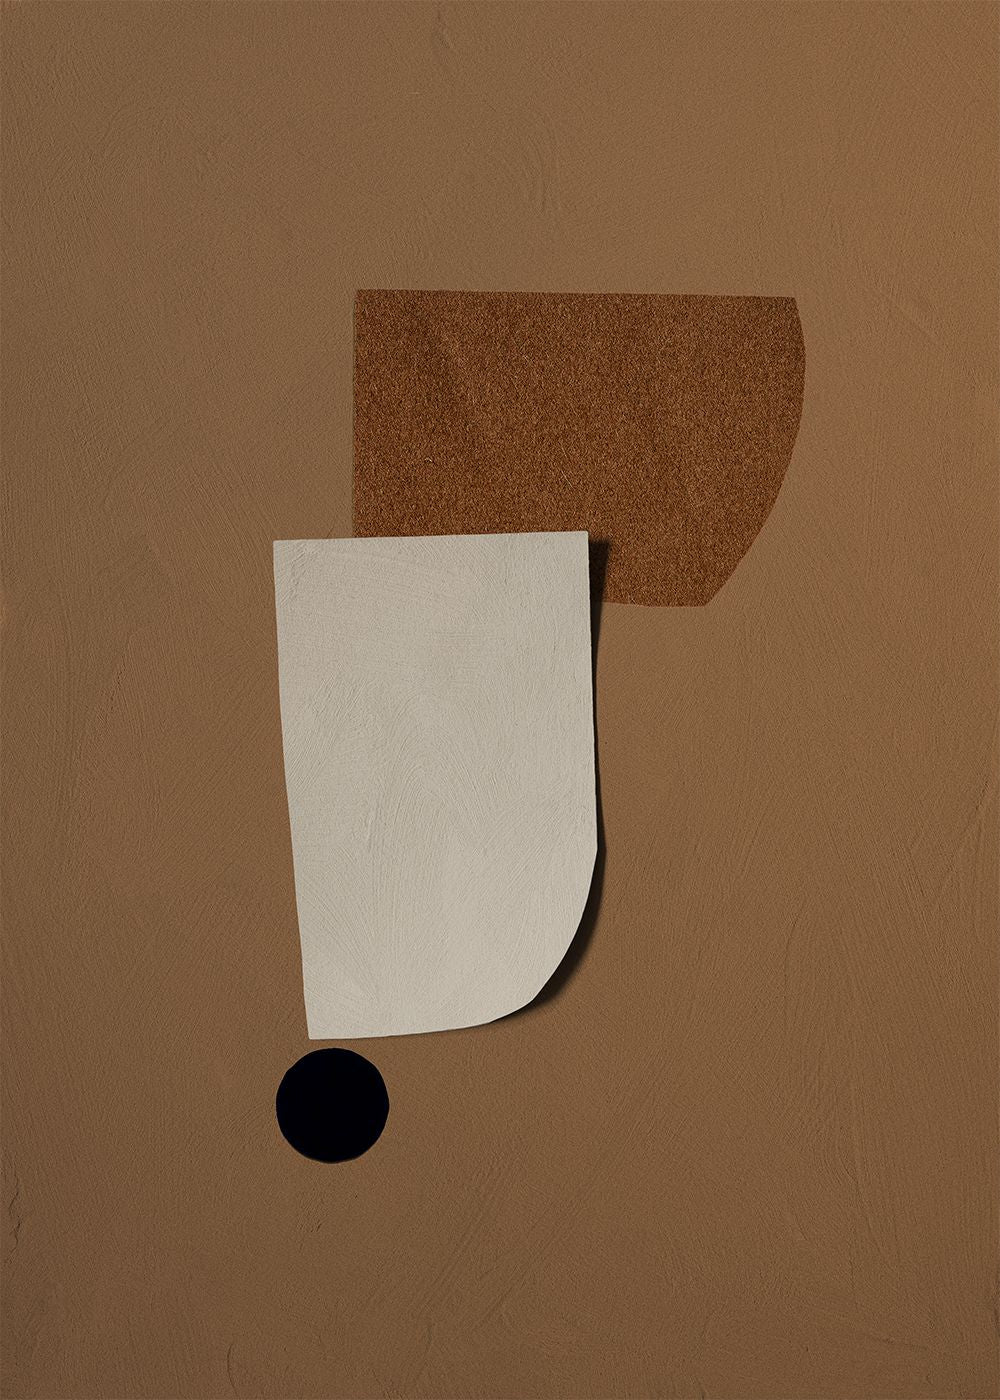 Paper Collective Tippepunkt 02 plakat, 30x40 cm